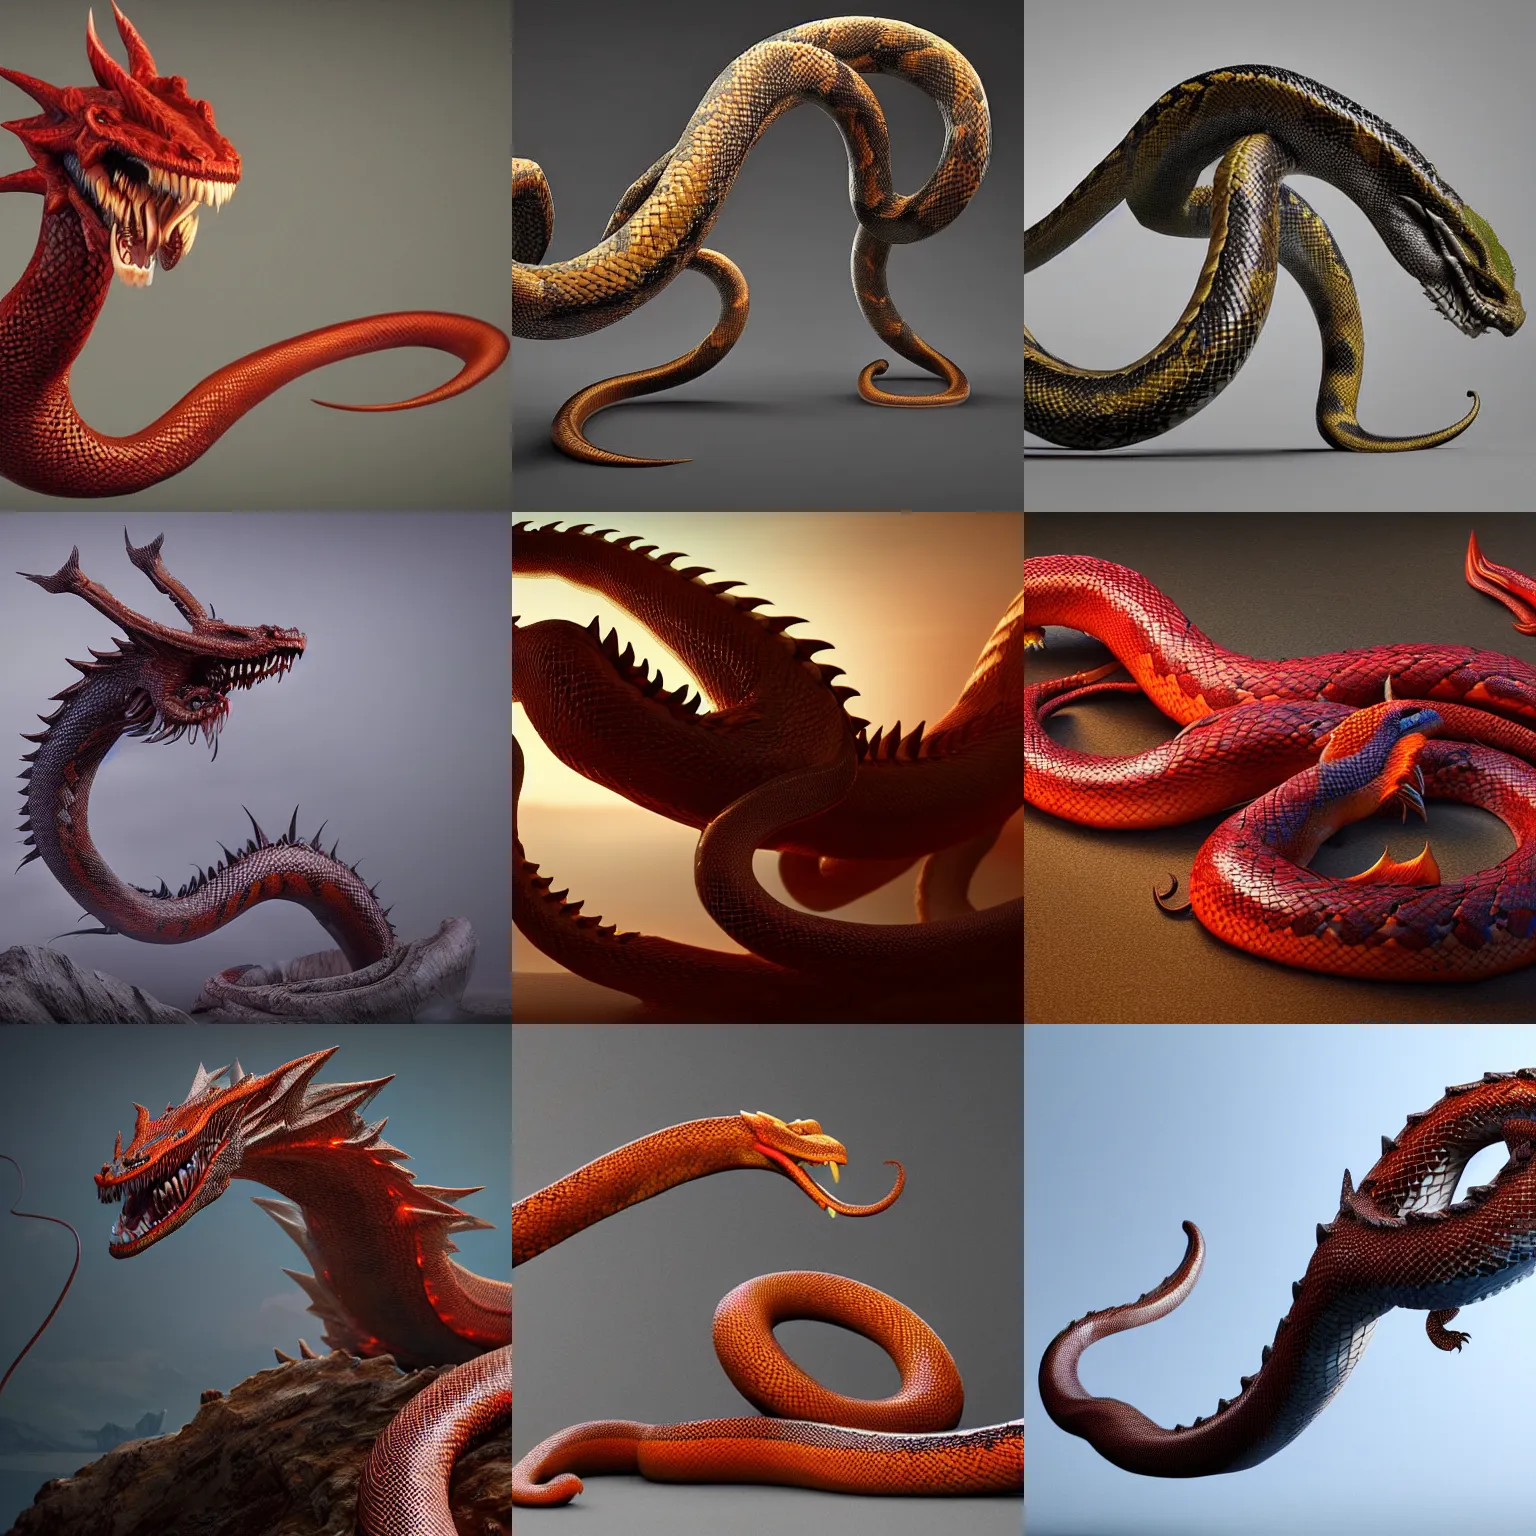 Prompt: long snake dragon chimera, octane render, award-winning, featured on artstation